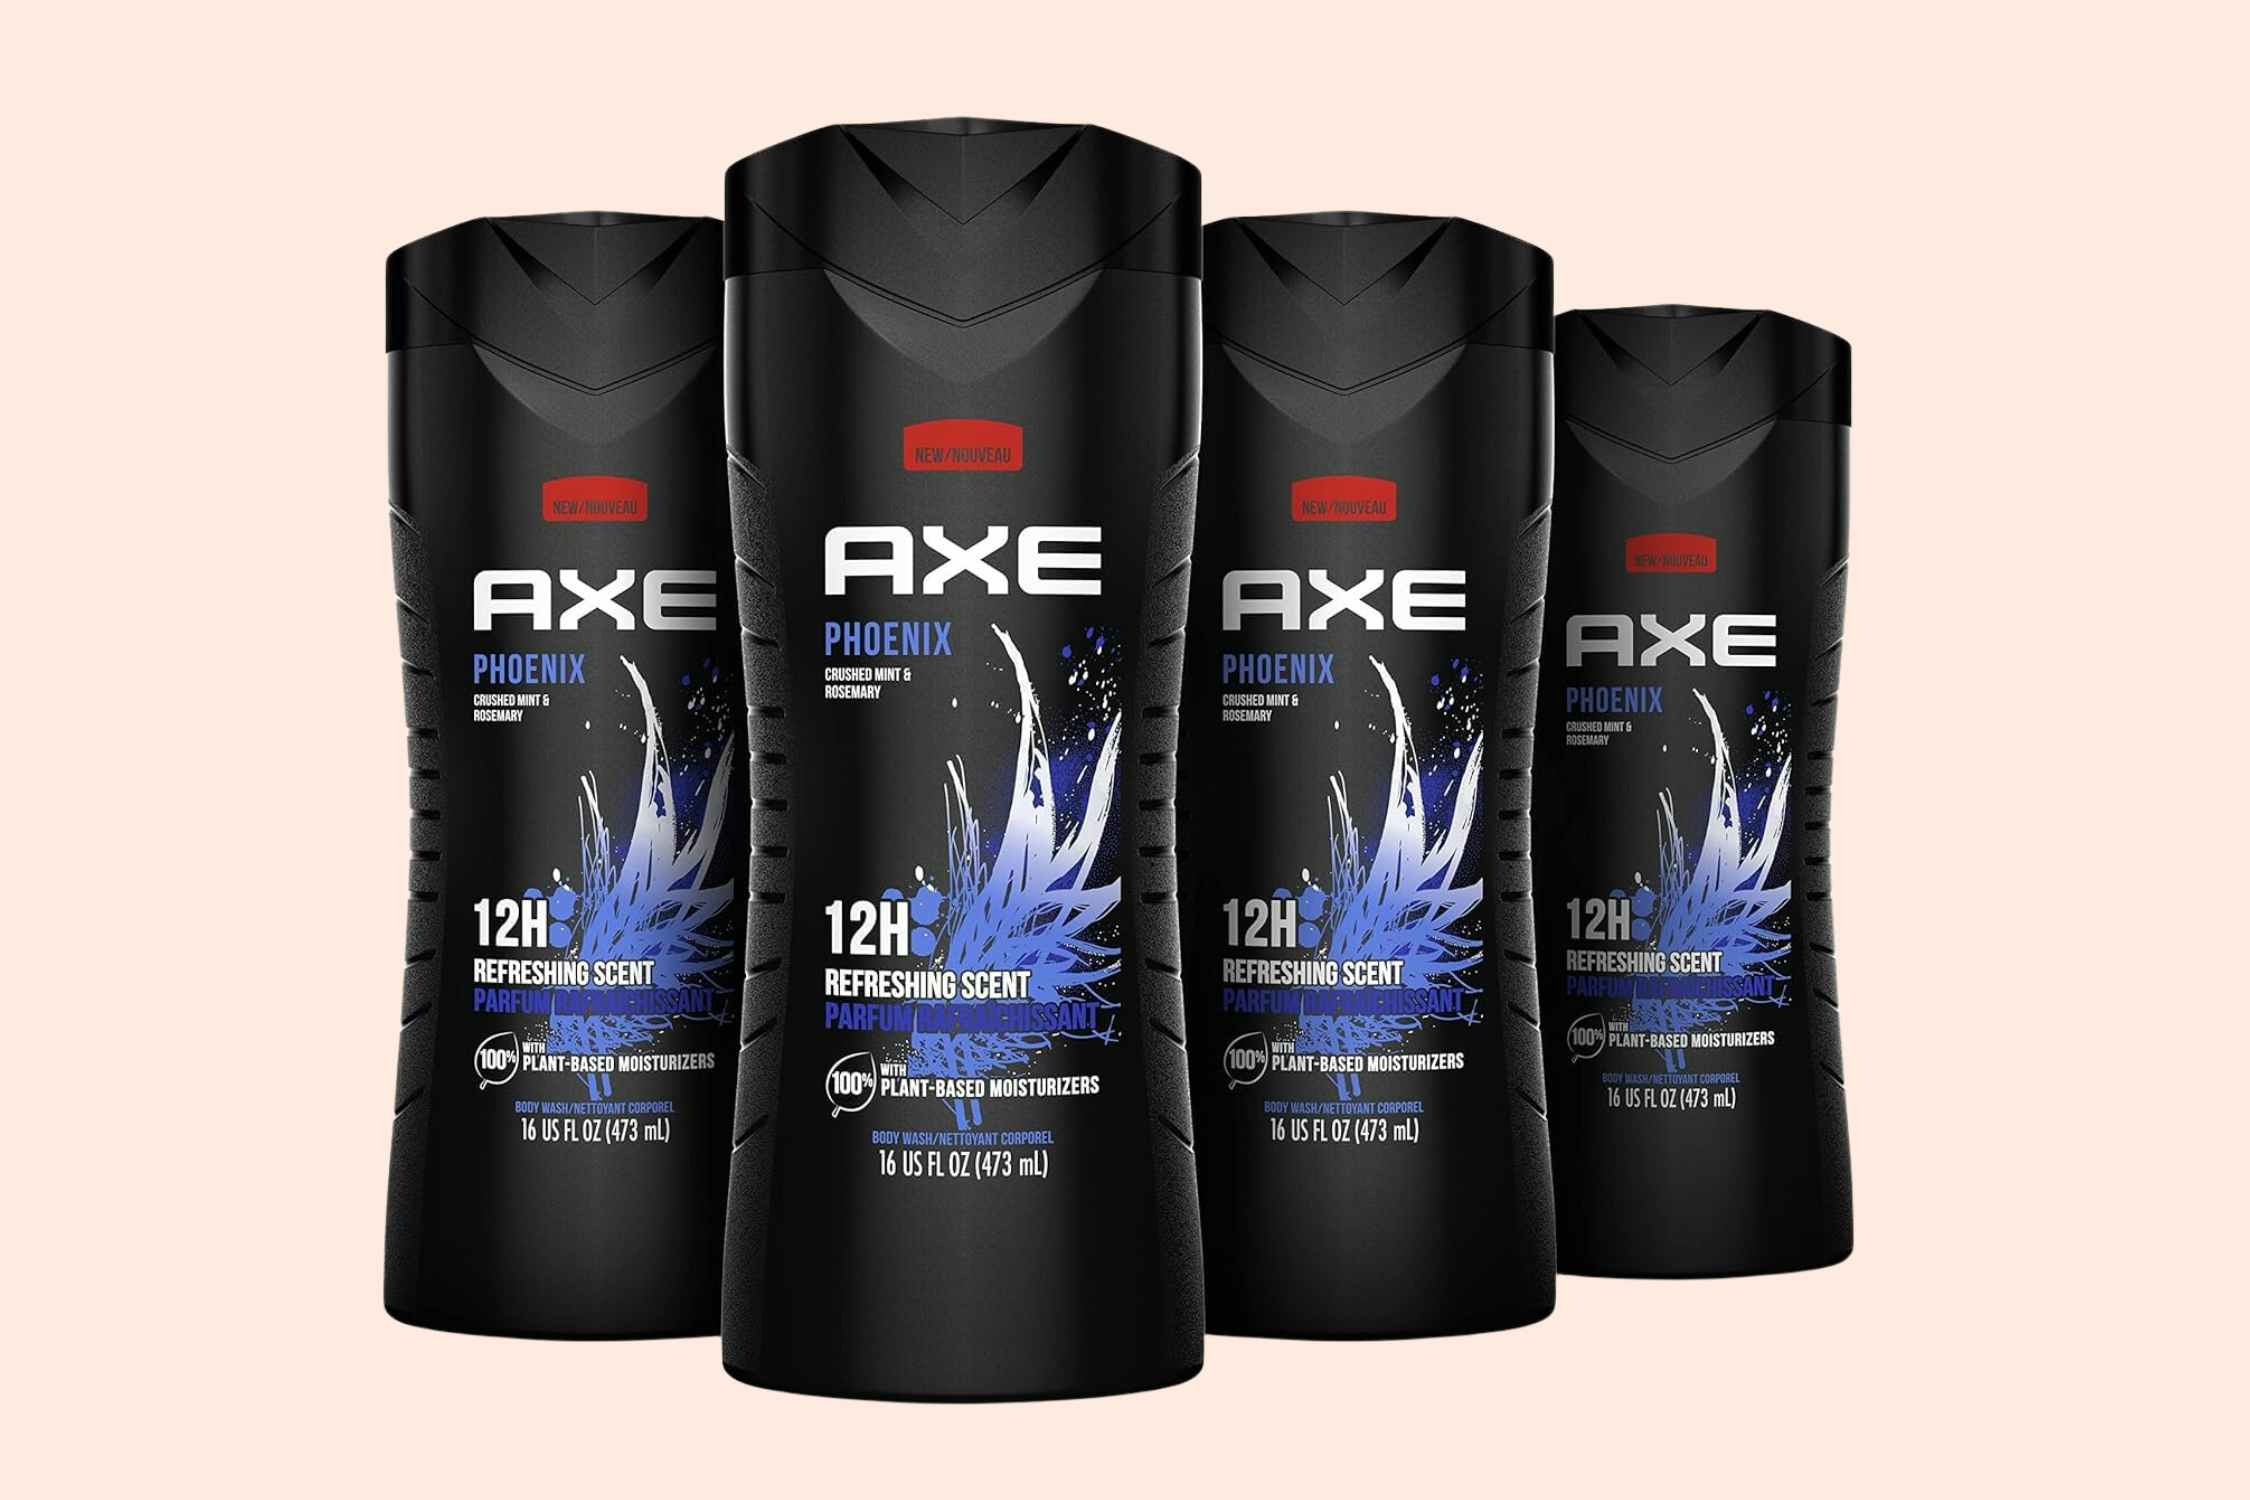 Axe Body Wash: Get 4 Bottles for $8.39 on Amazon (Reg. $18)